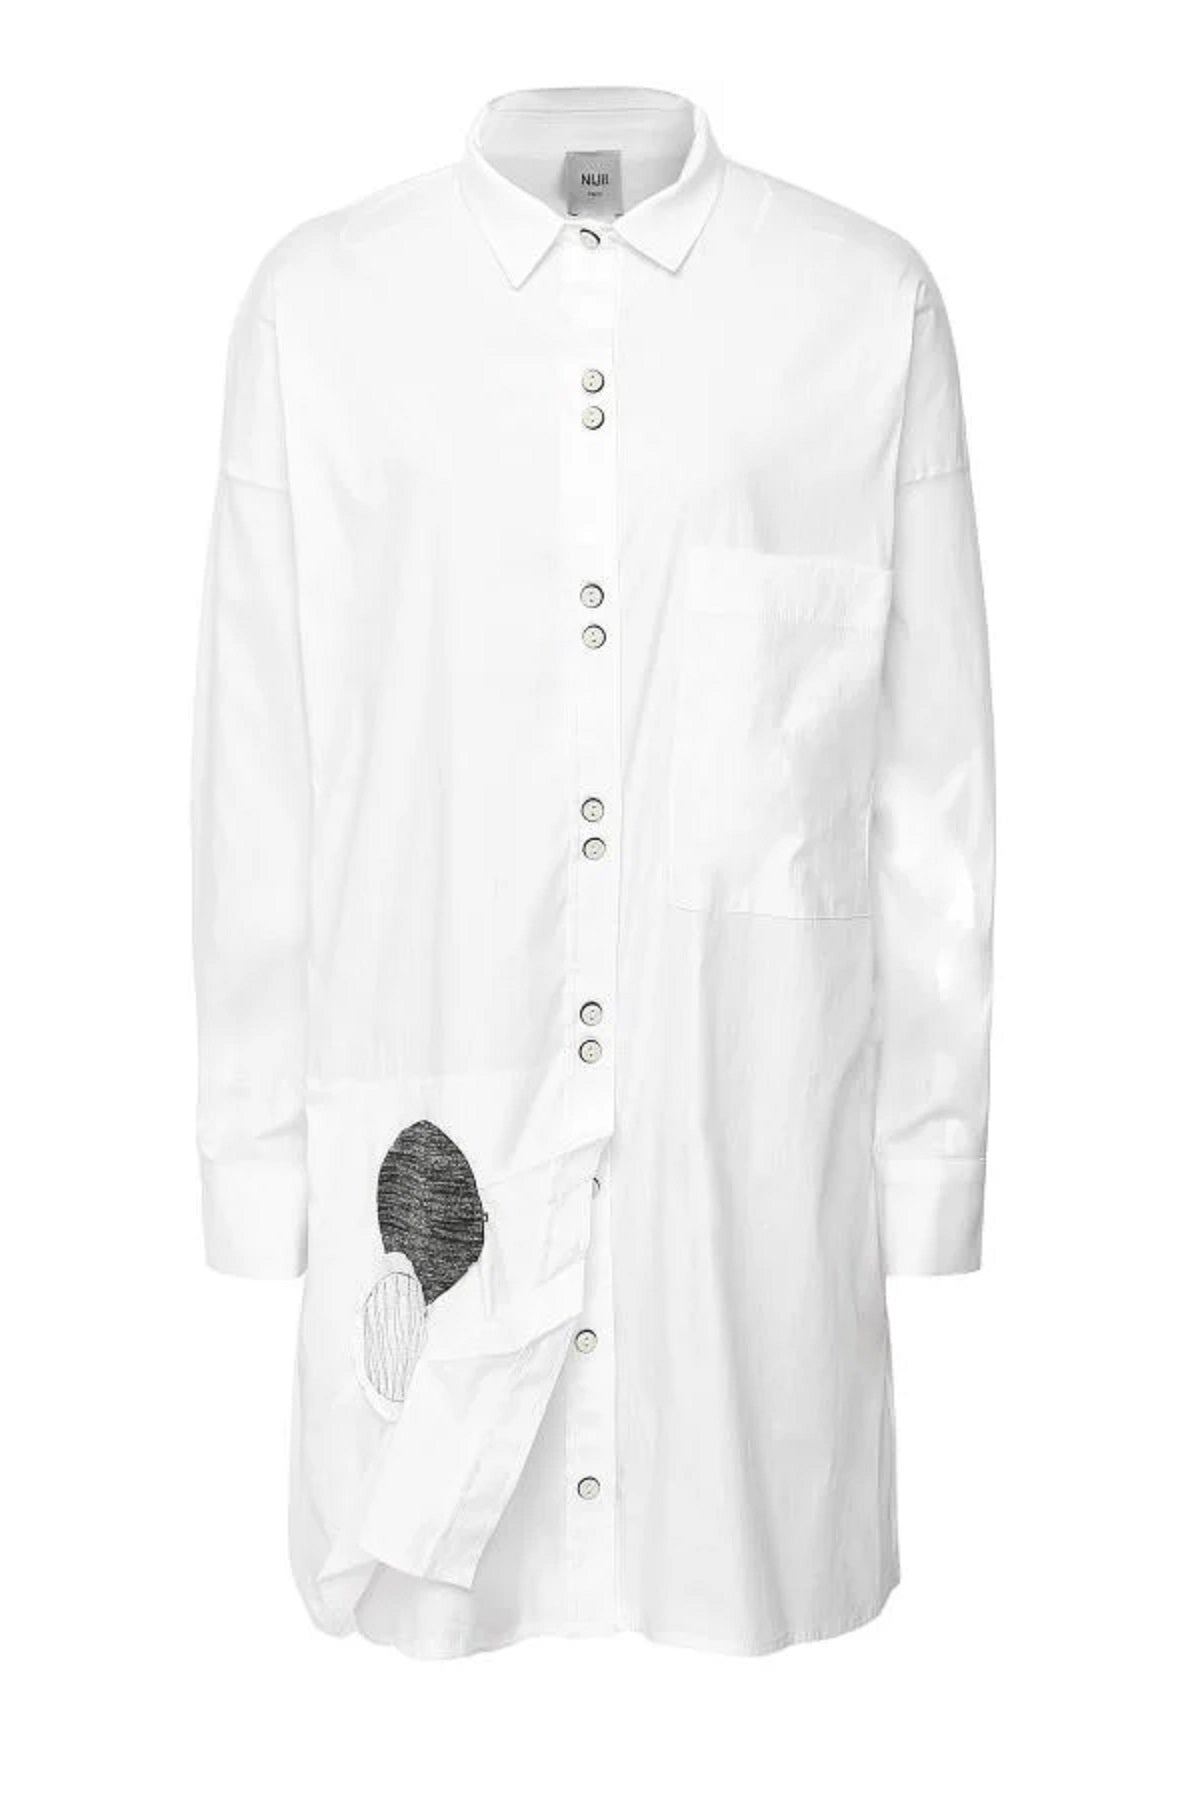 Nijii Paris Shirt 36016, White